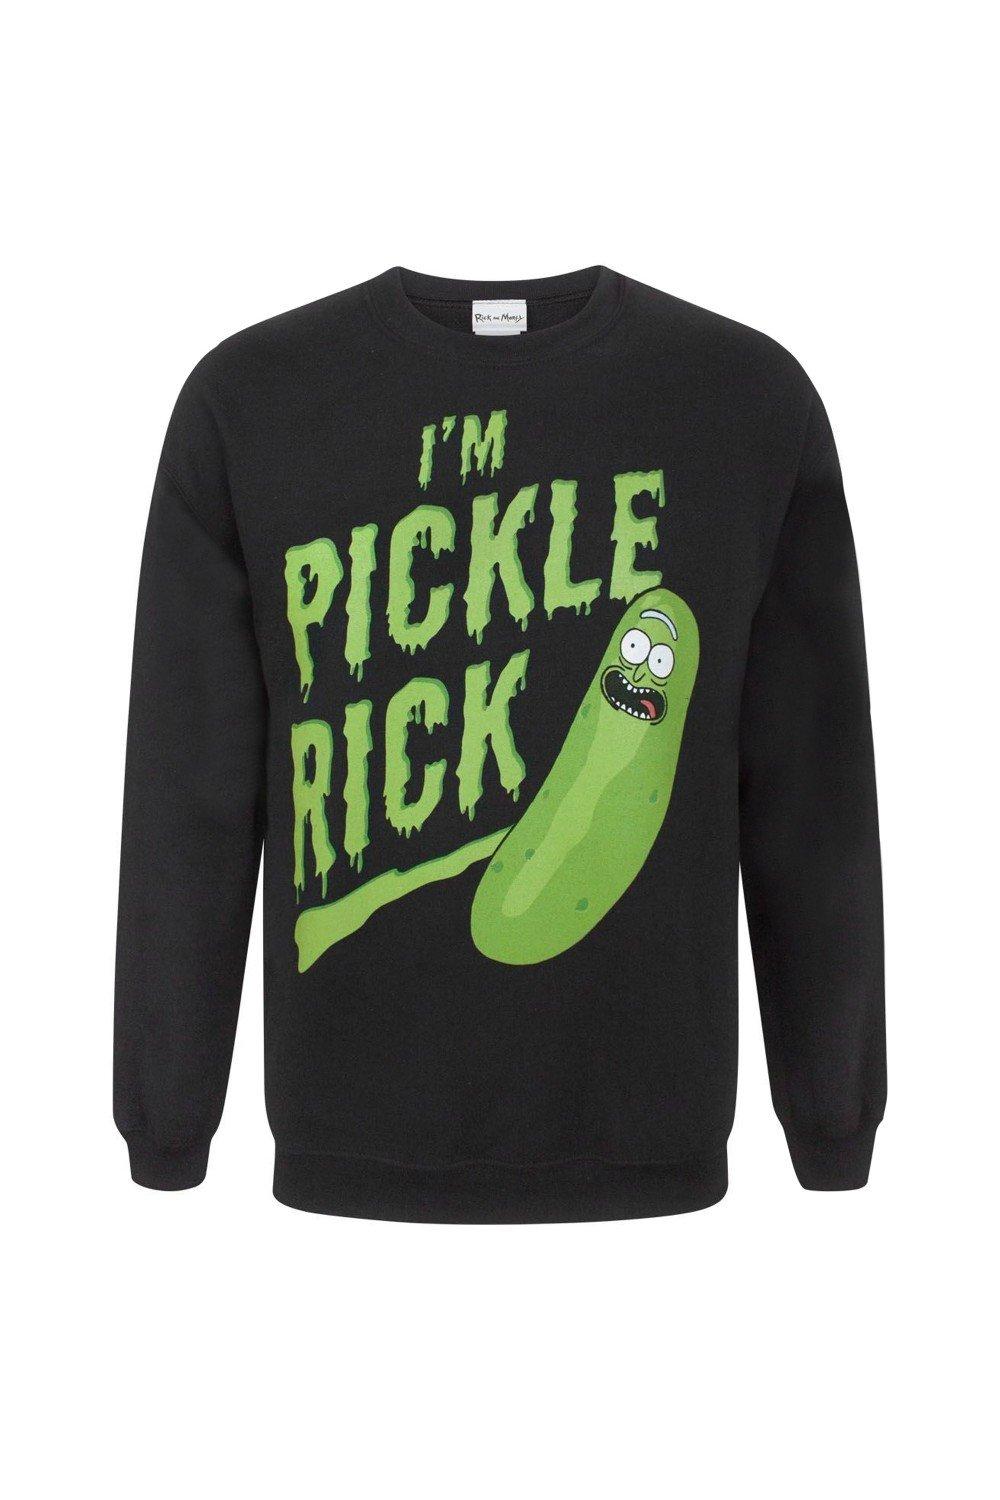 Pickle Rick Sweater